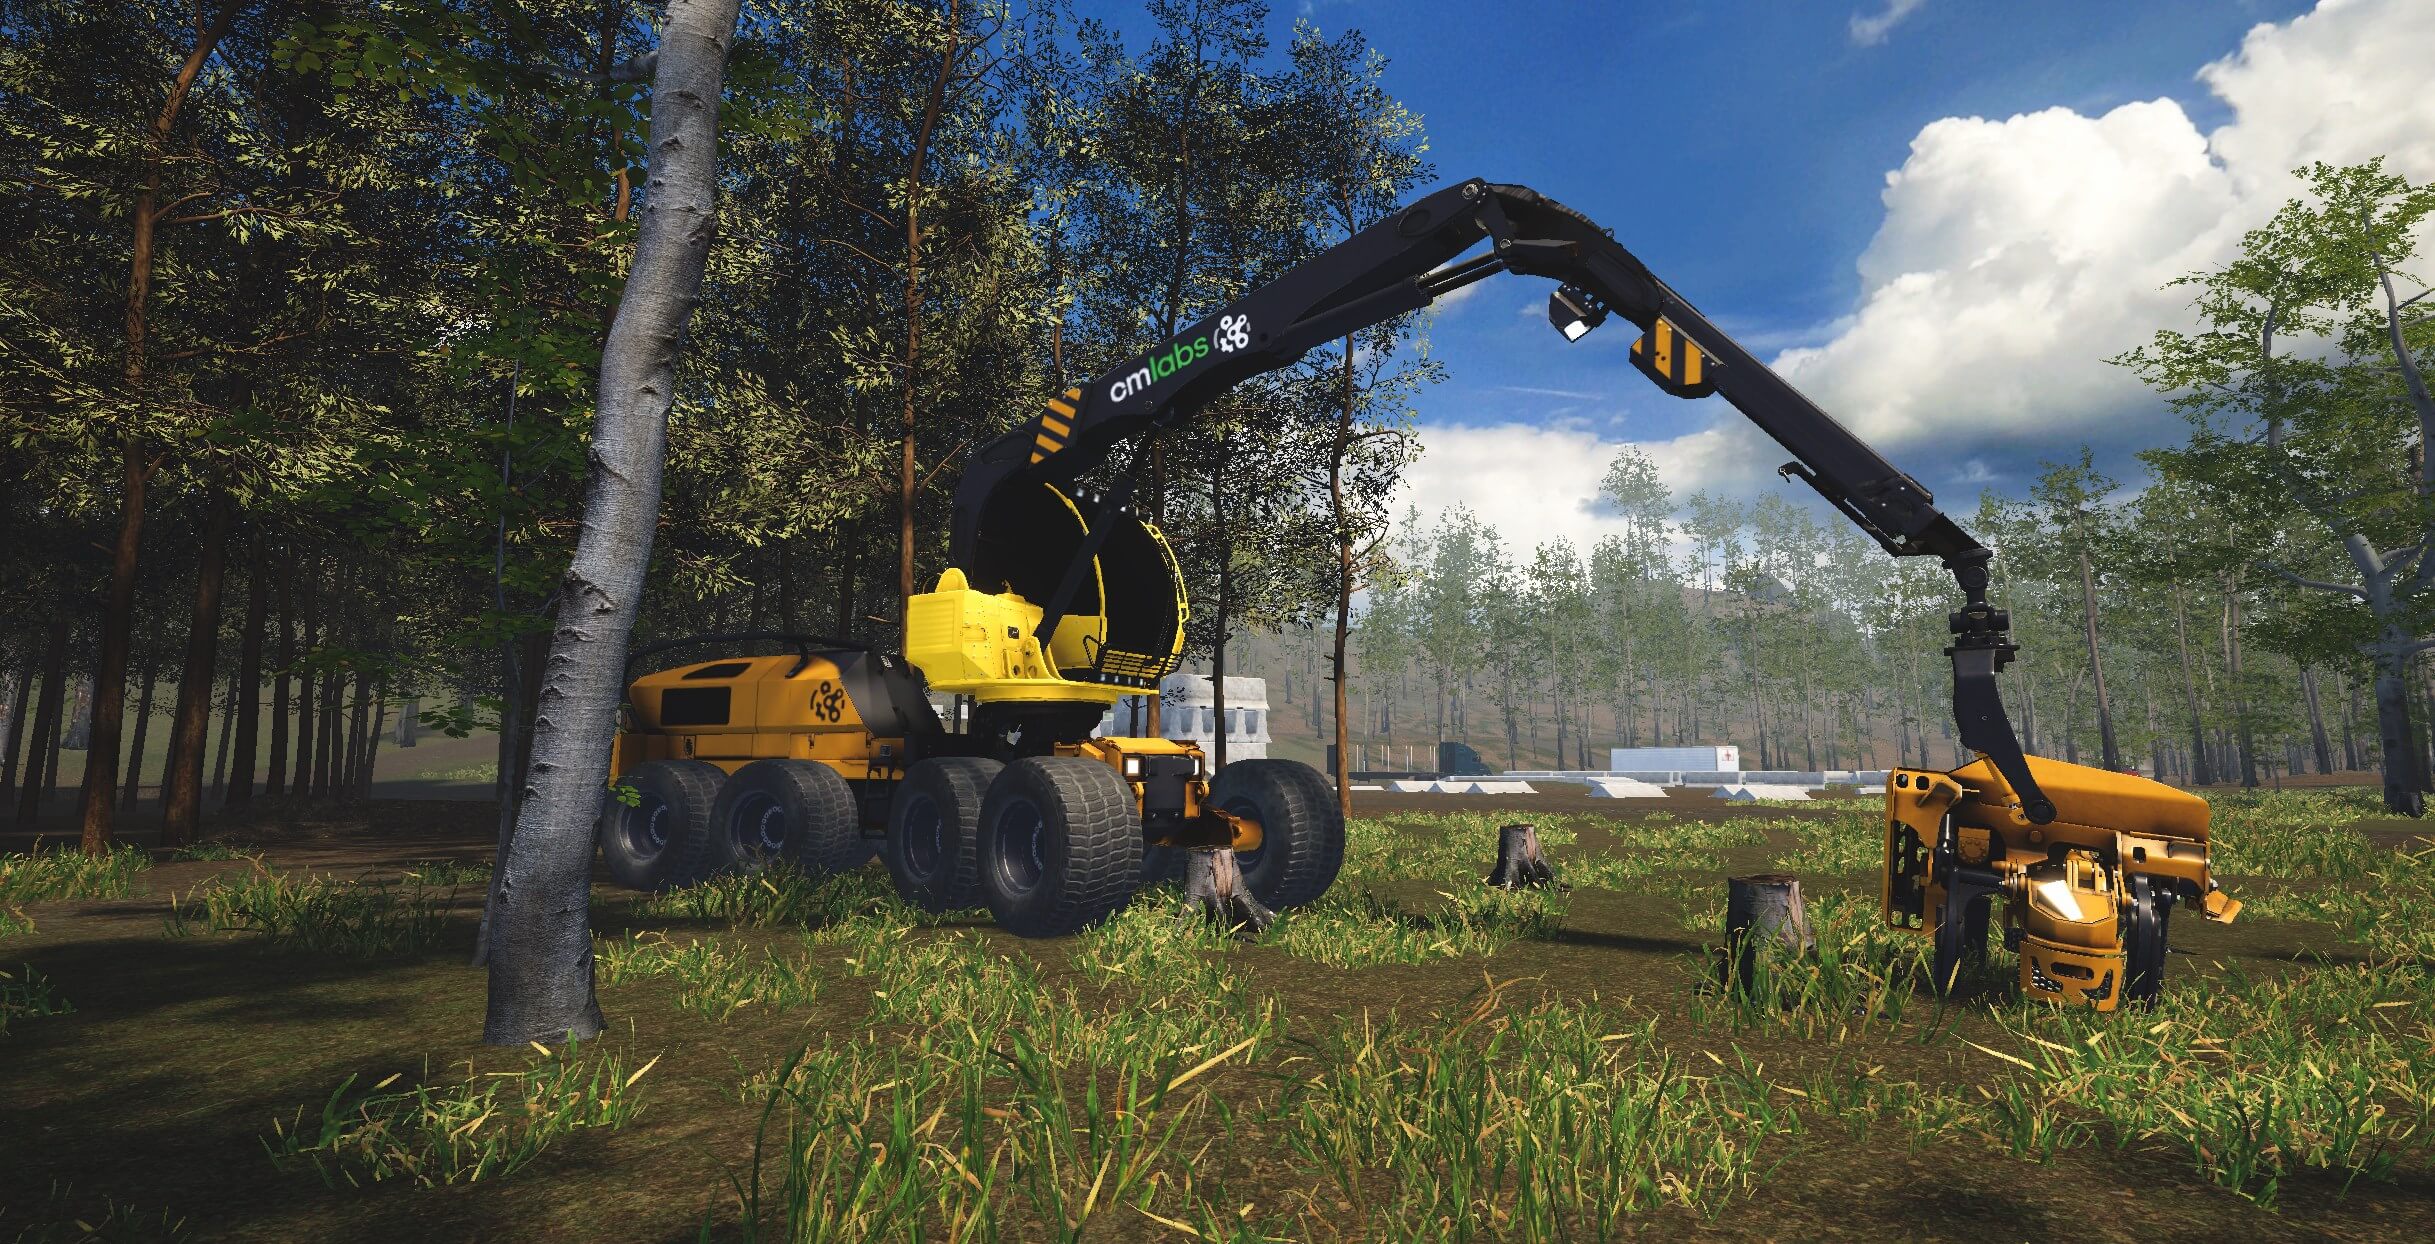 Harvester simulator training pack – Equipment at rest